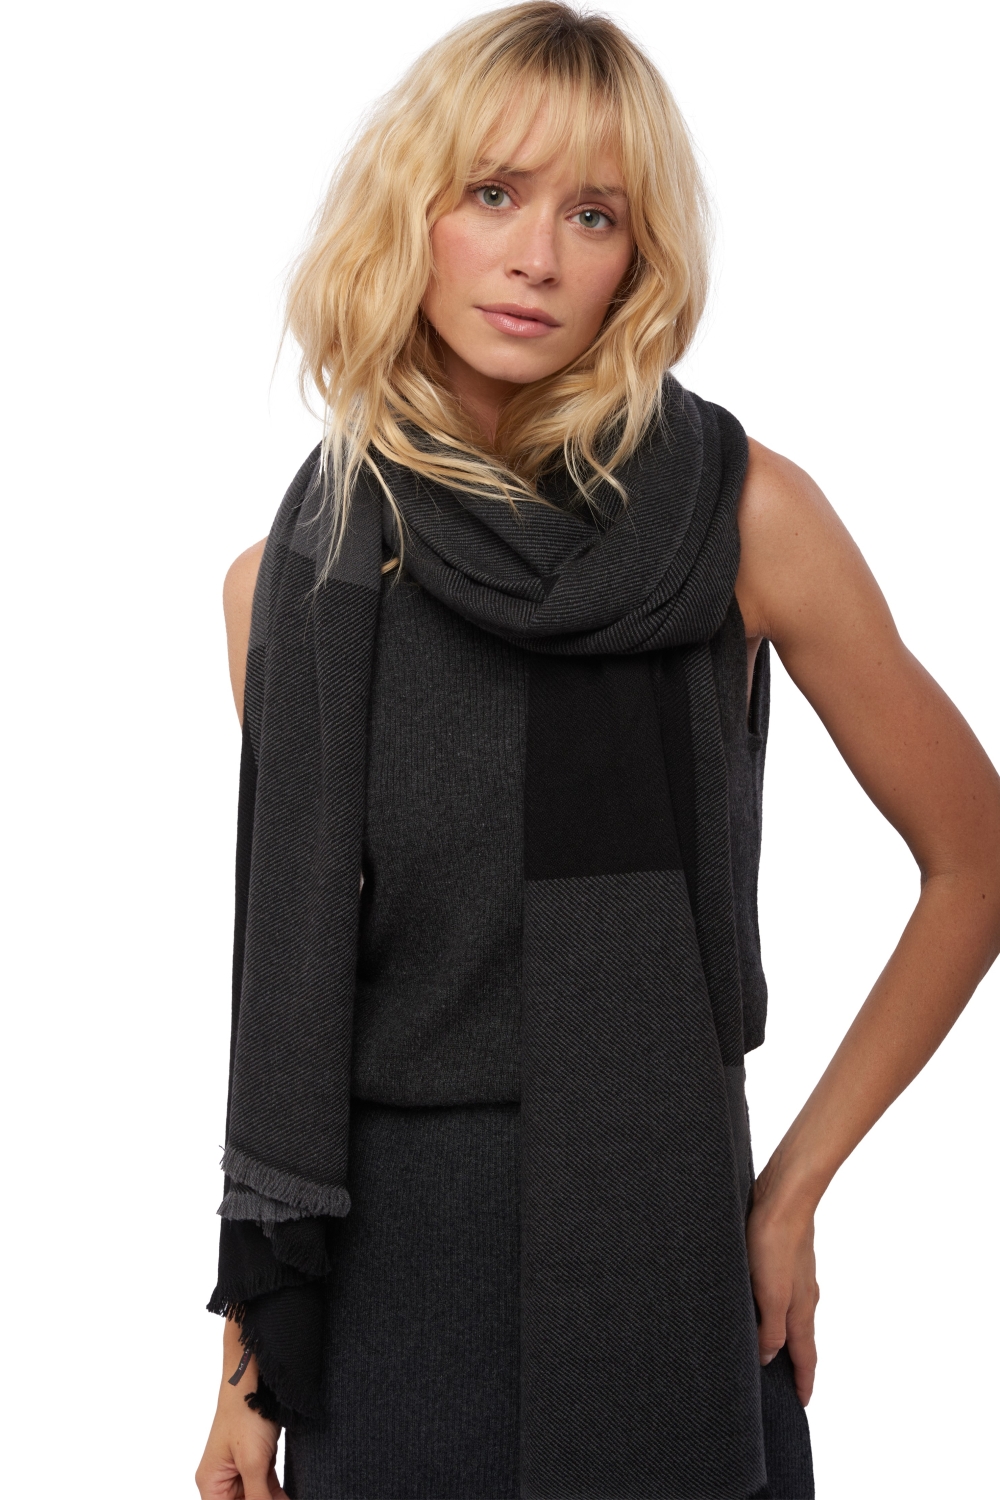 Cashmere accessories shawls verona black matt charcoal 225 x 75 cm